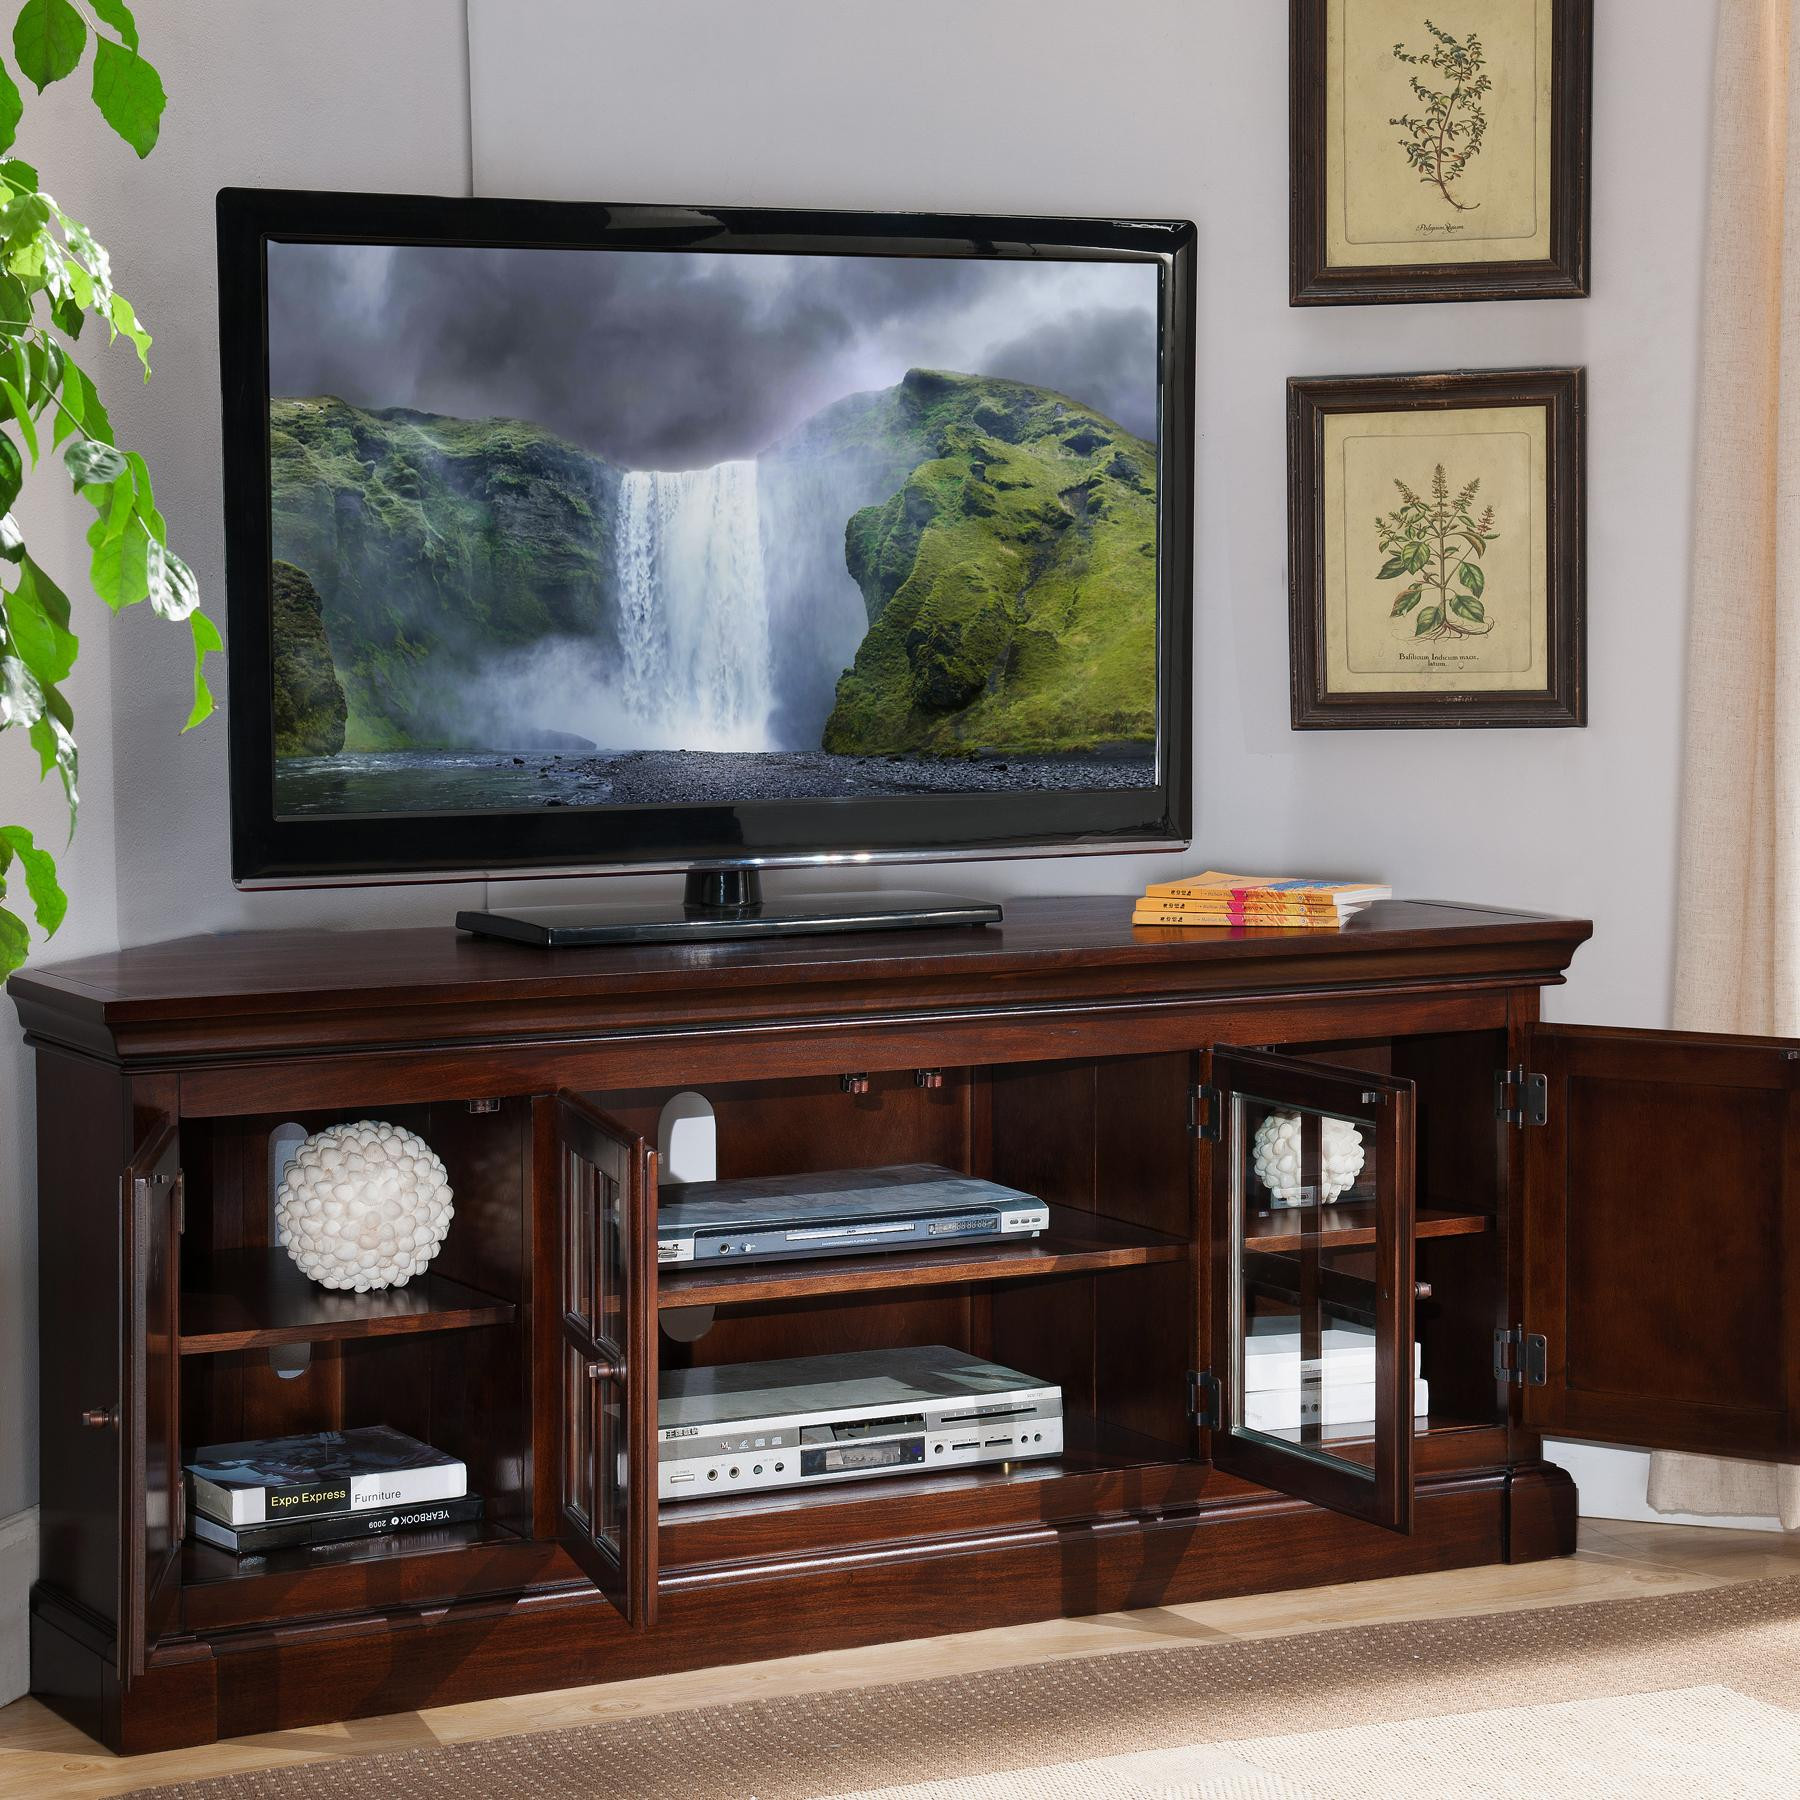 Small Tv For Kitchen Amazon
 Amazon Leick Bella Maison 56" Corner TV Stand with